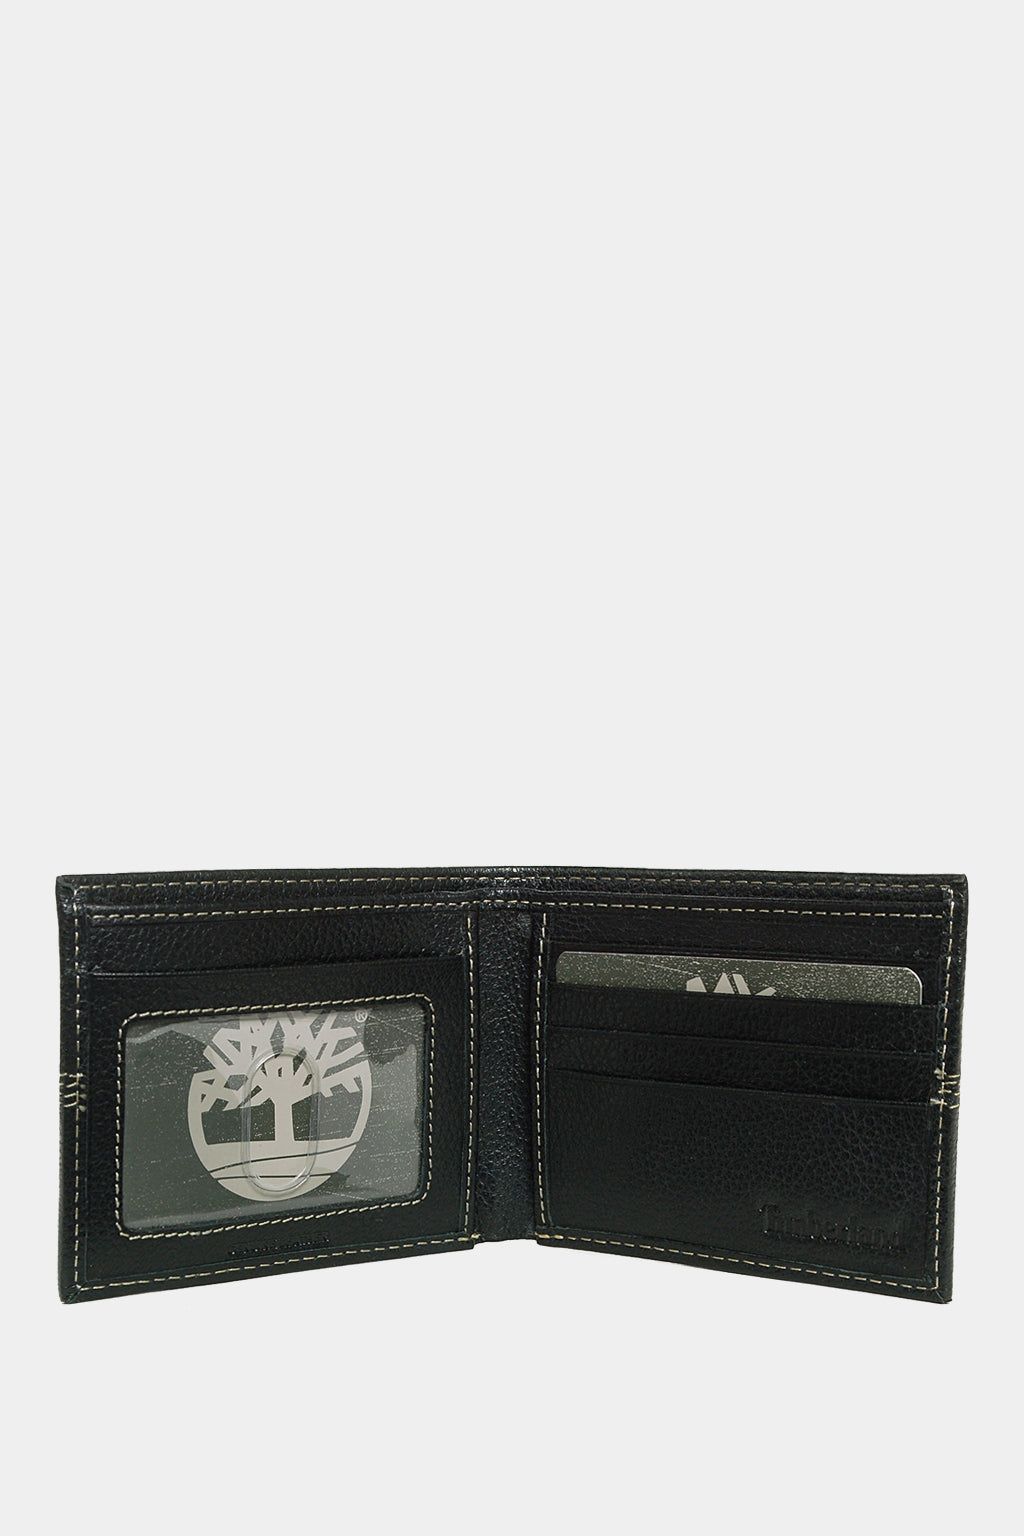 Timberland - Men's Wallet Genuine Leather Pebble Grain Stitch Detail Slim Bifold